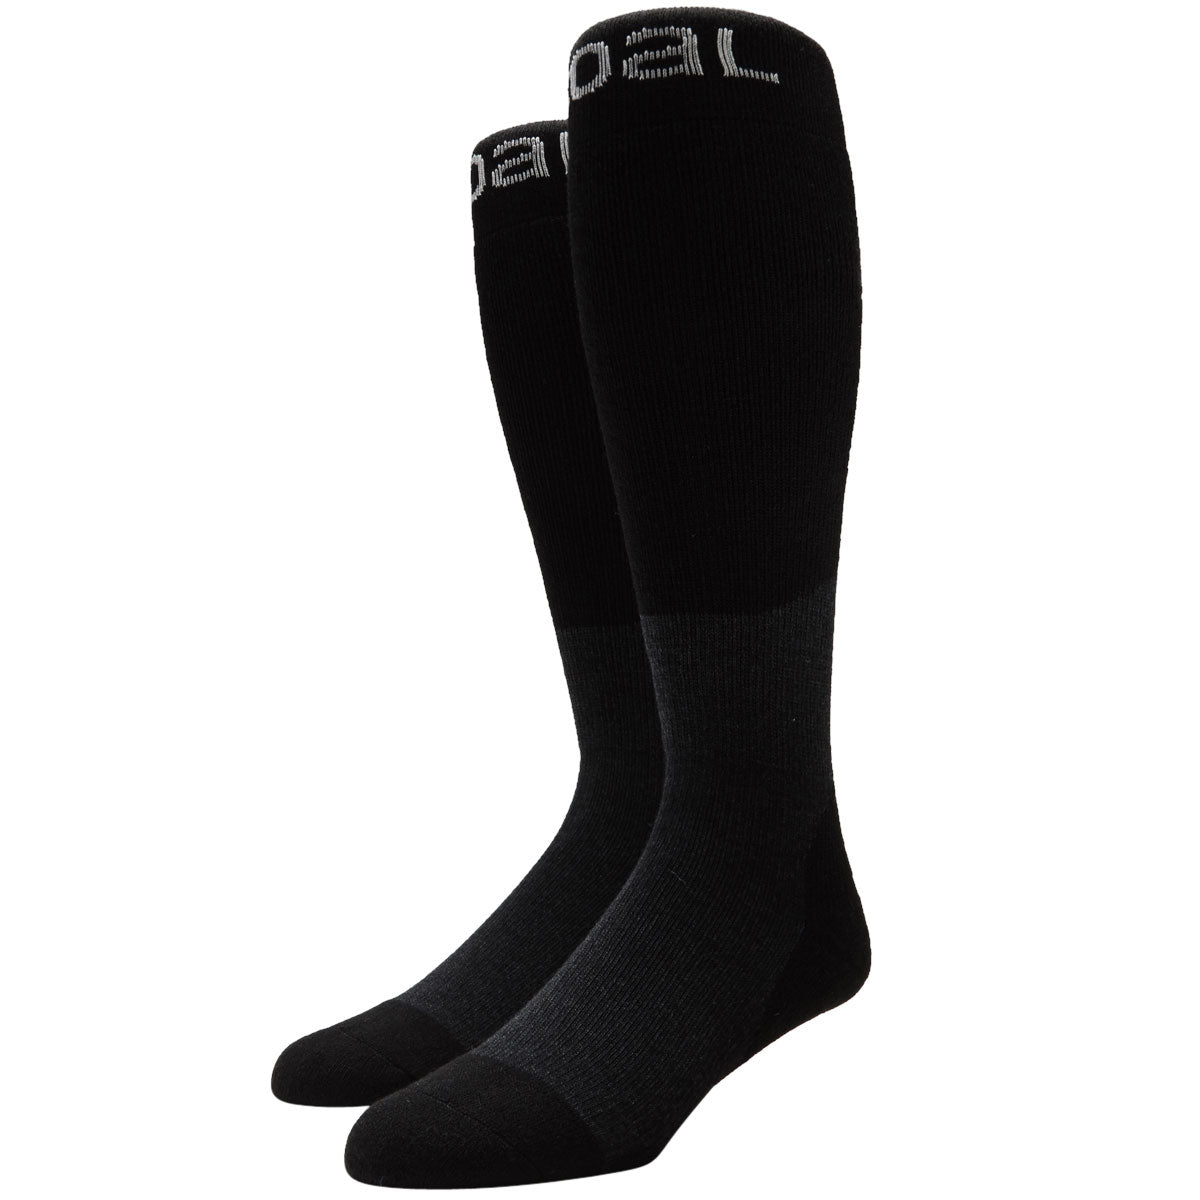 Coal Lightweight Snowboard Socks - Black image 1